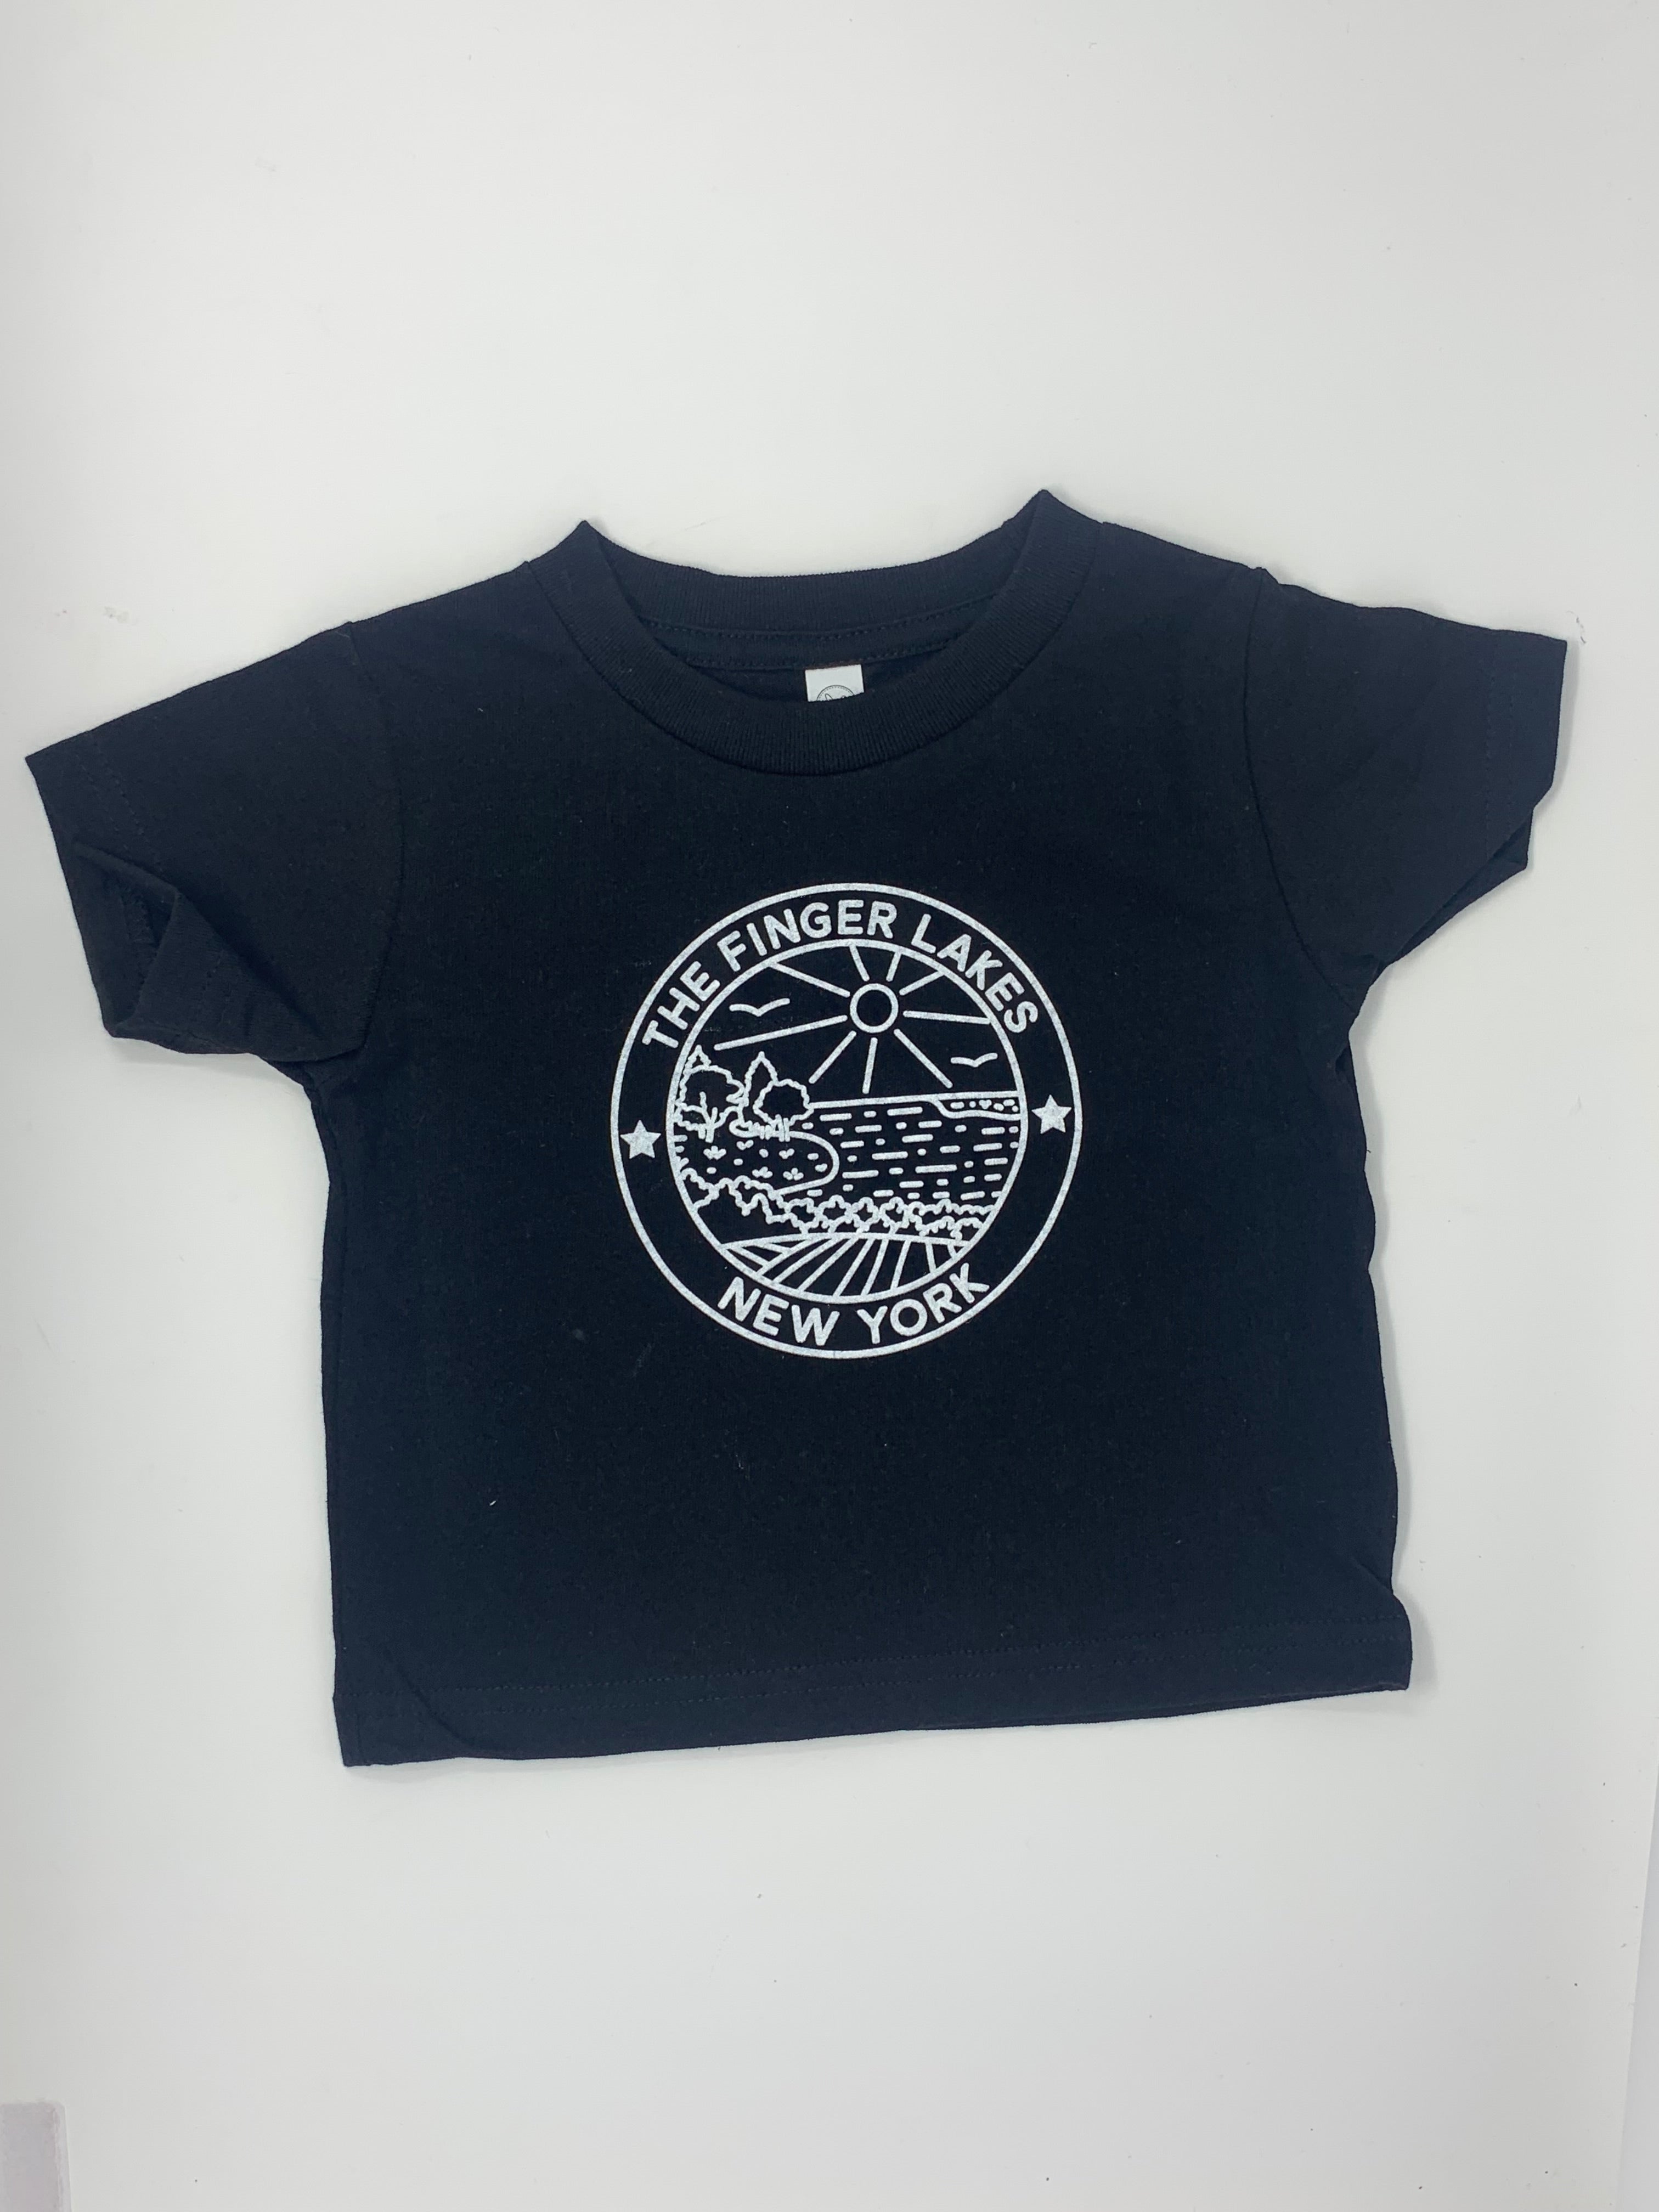 The Finger Lakes Toddler T-Shirt